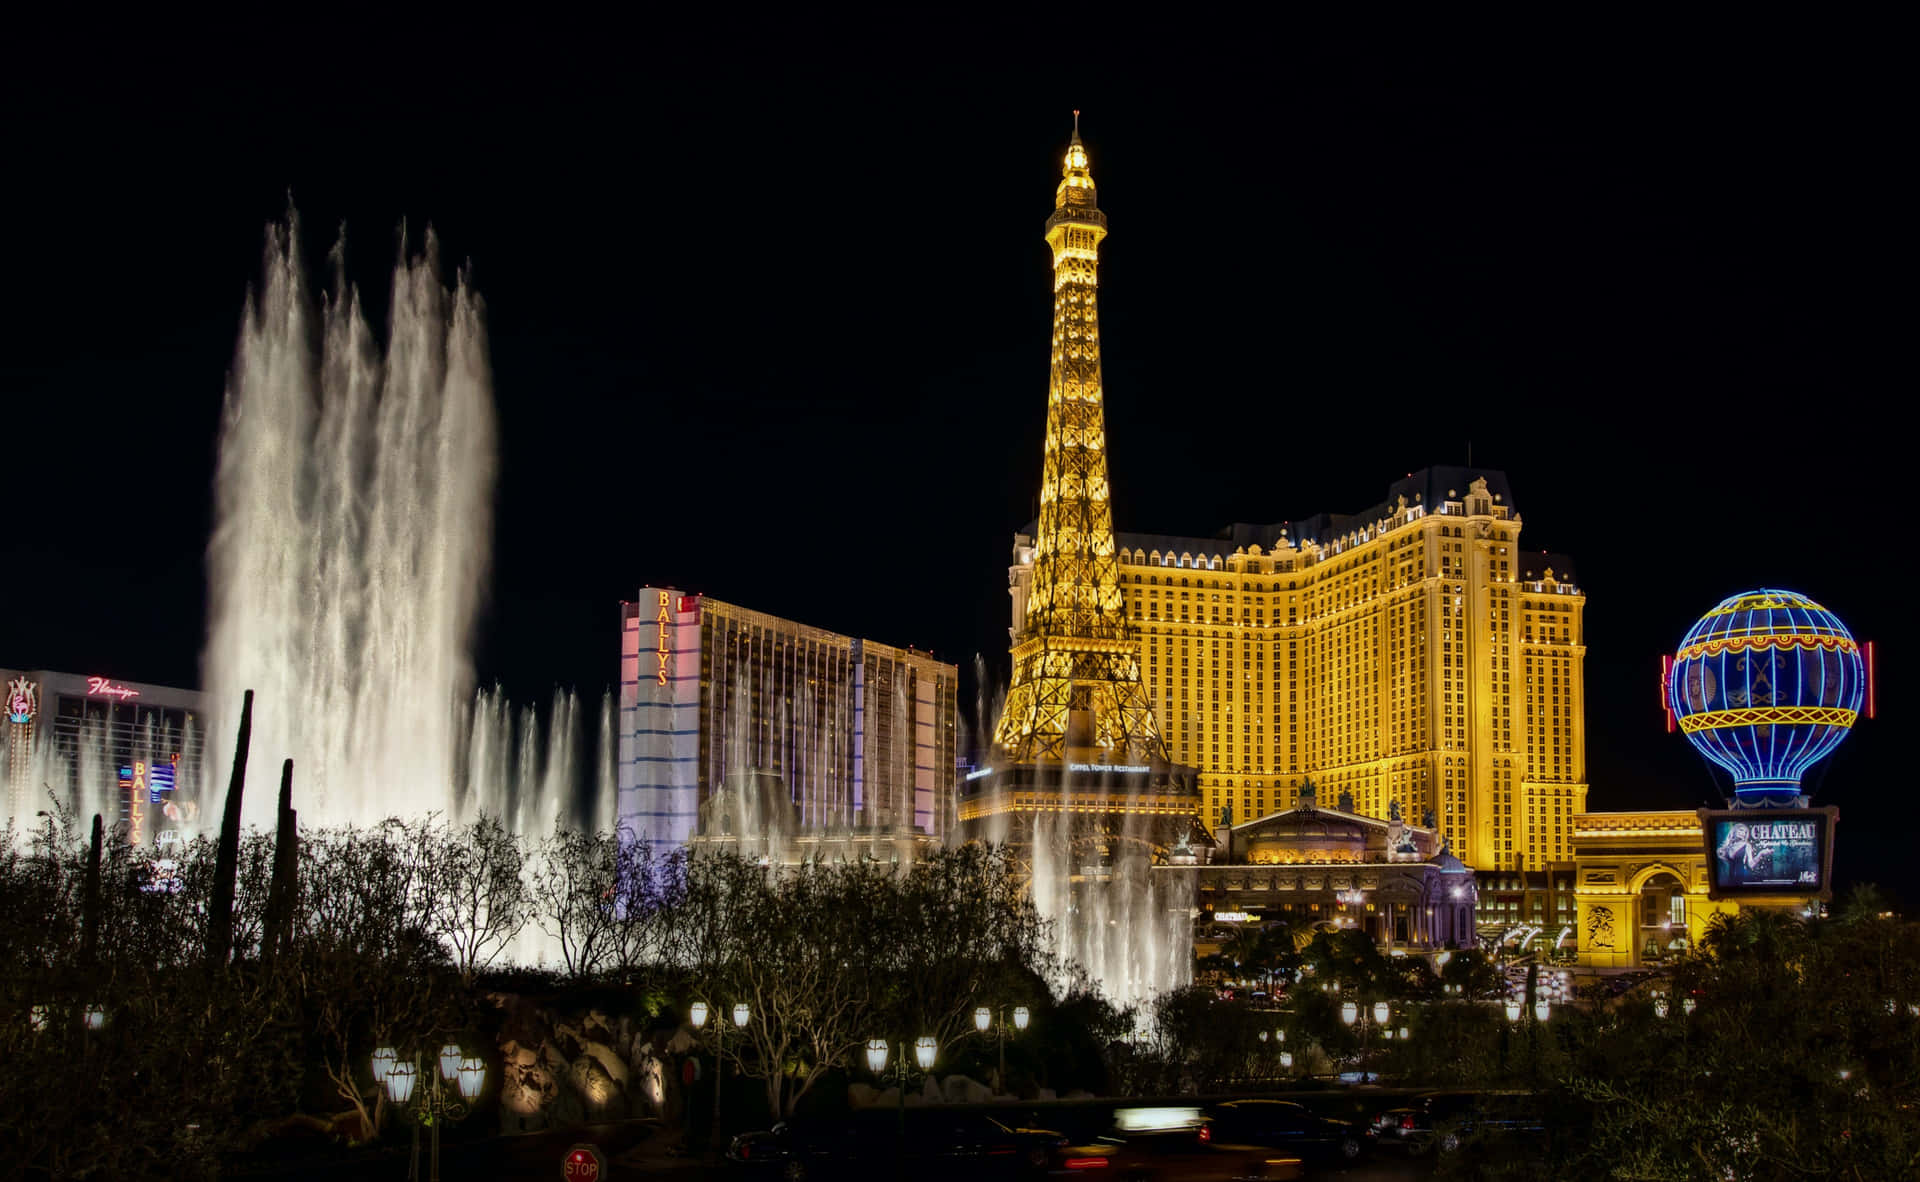 Amazing view of the iconic Las Vegas Strip